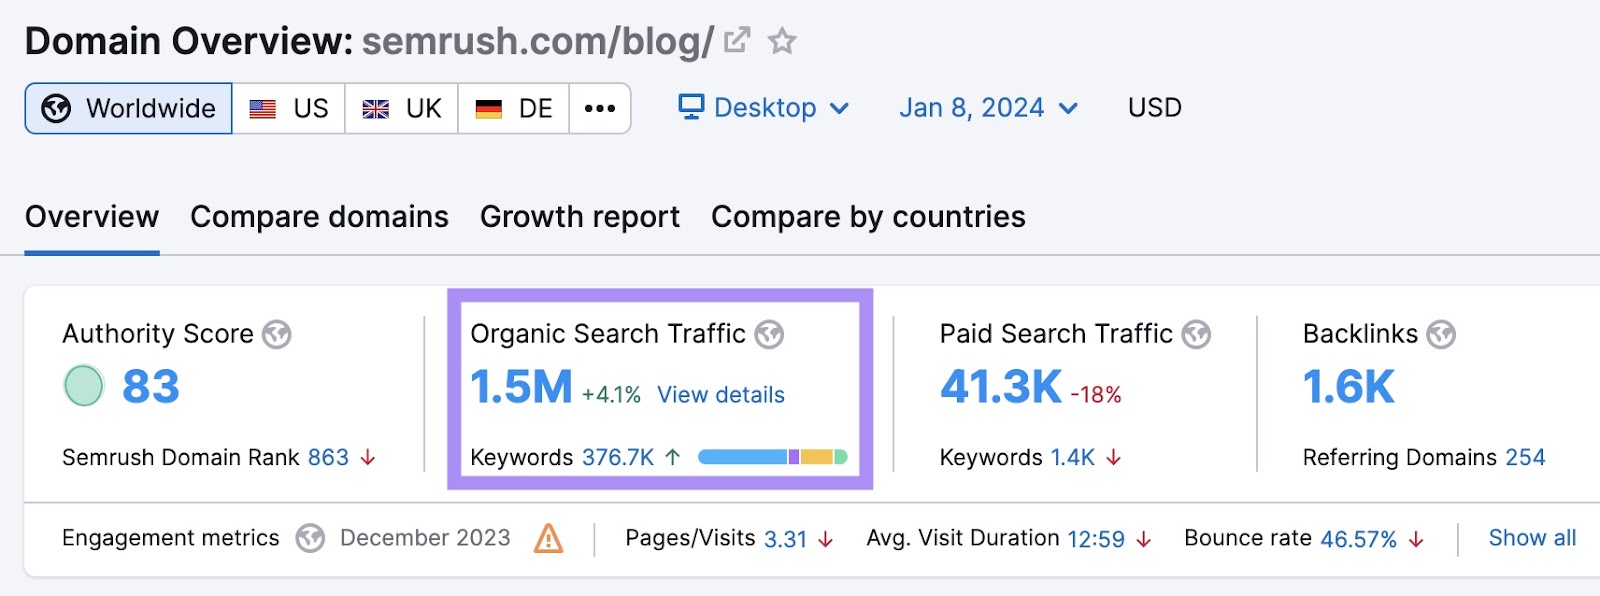 Semrush Blog has 1.5 million organic search visitors